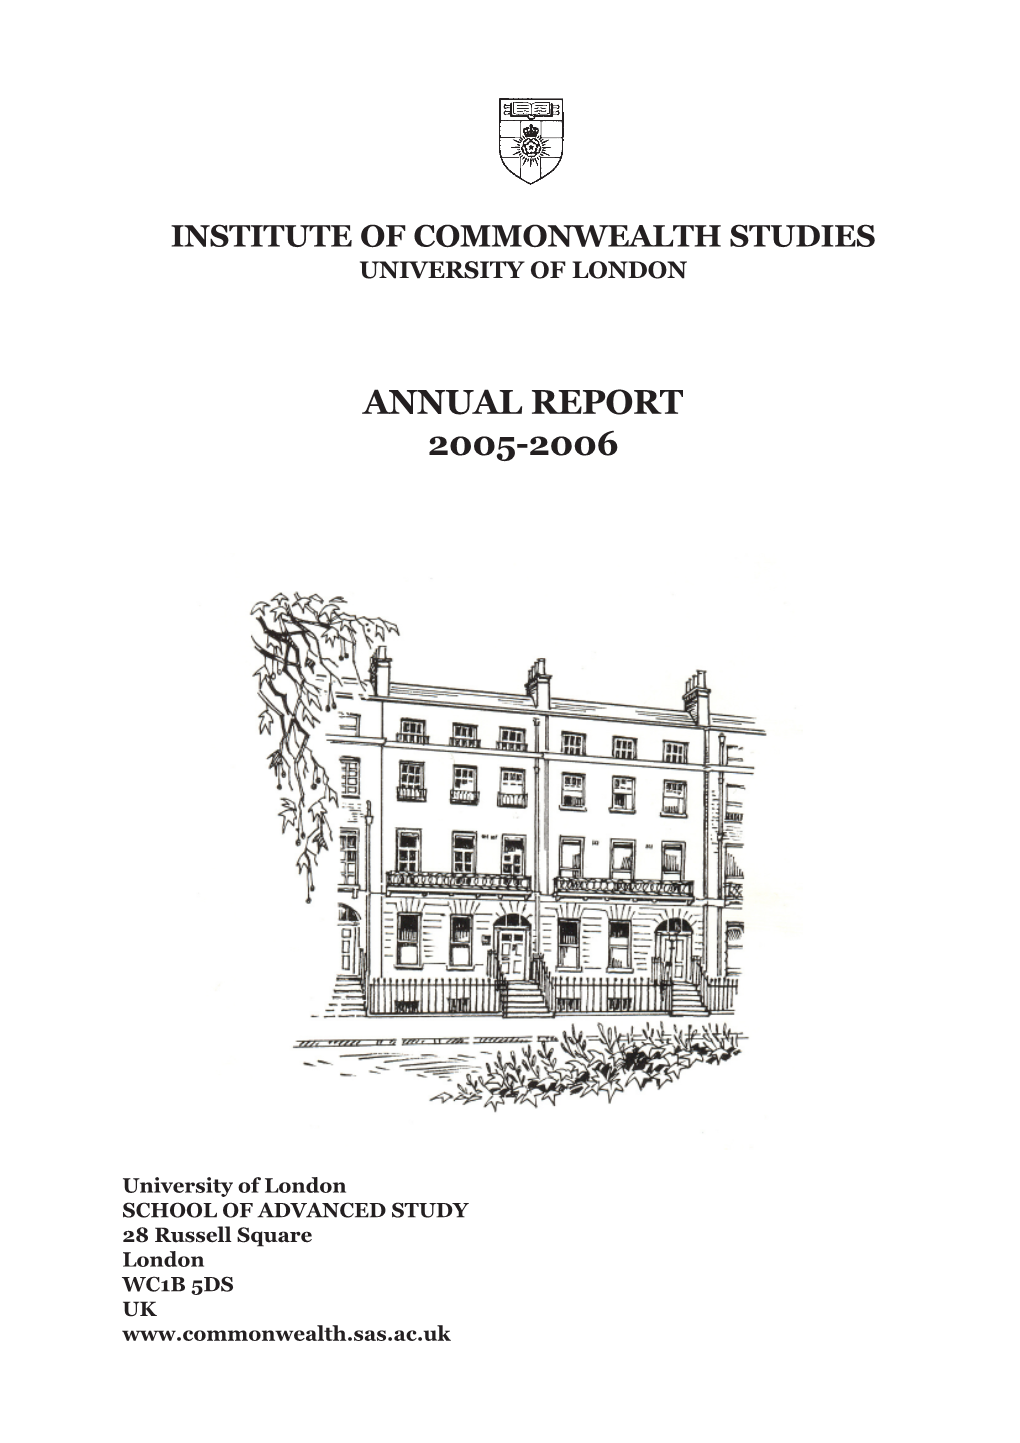 Annual Report 2005/06